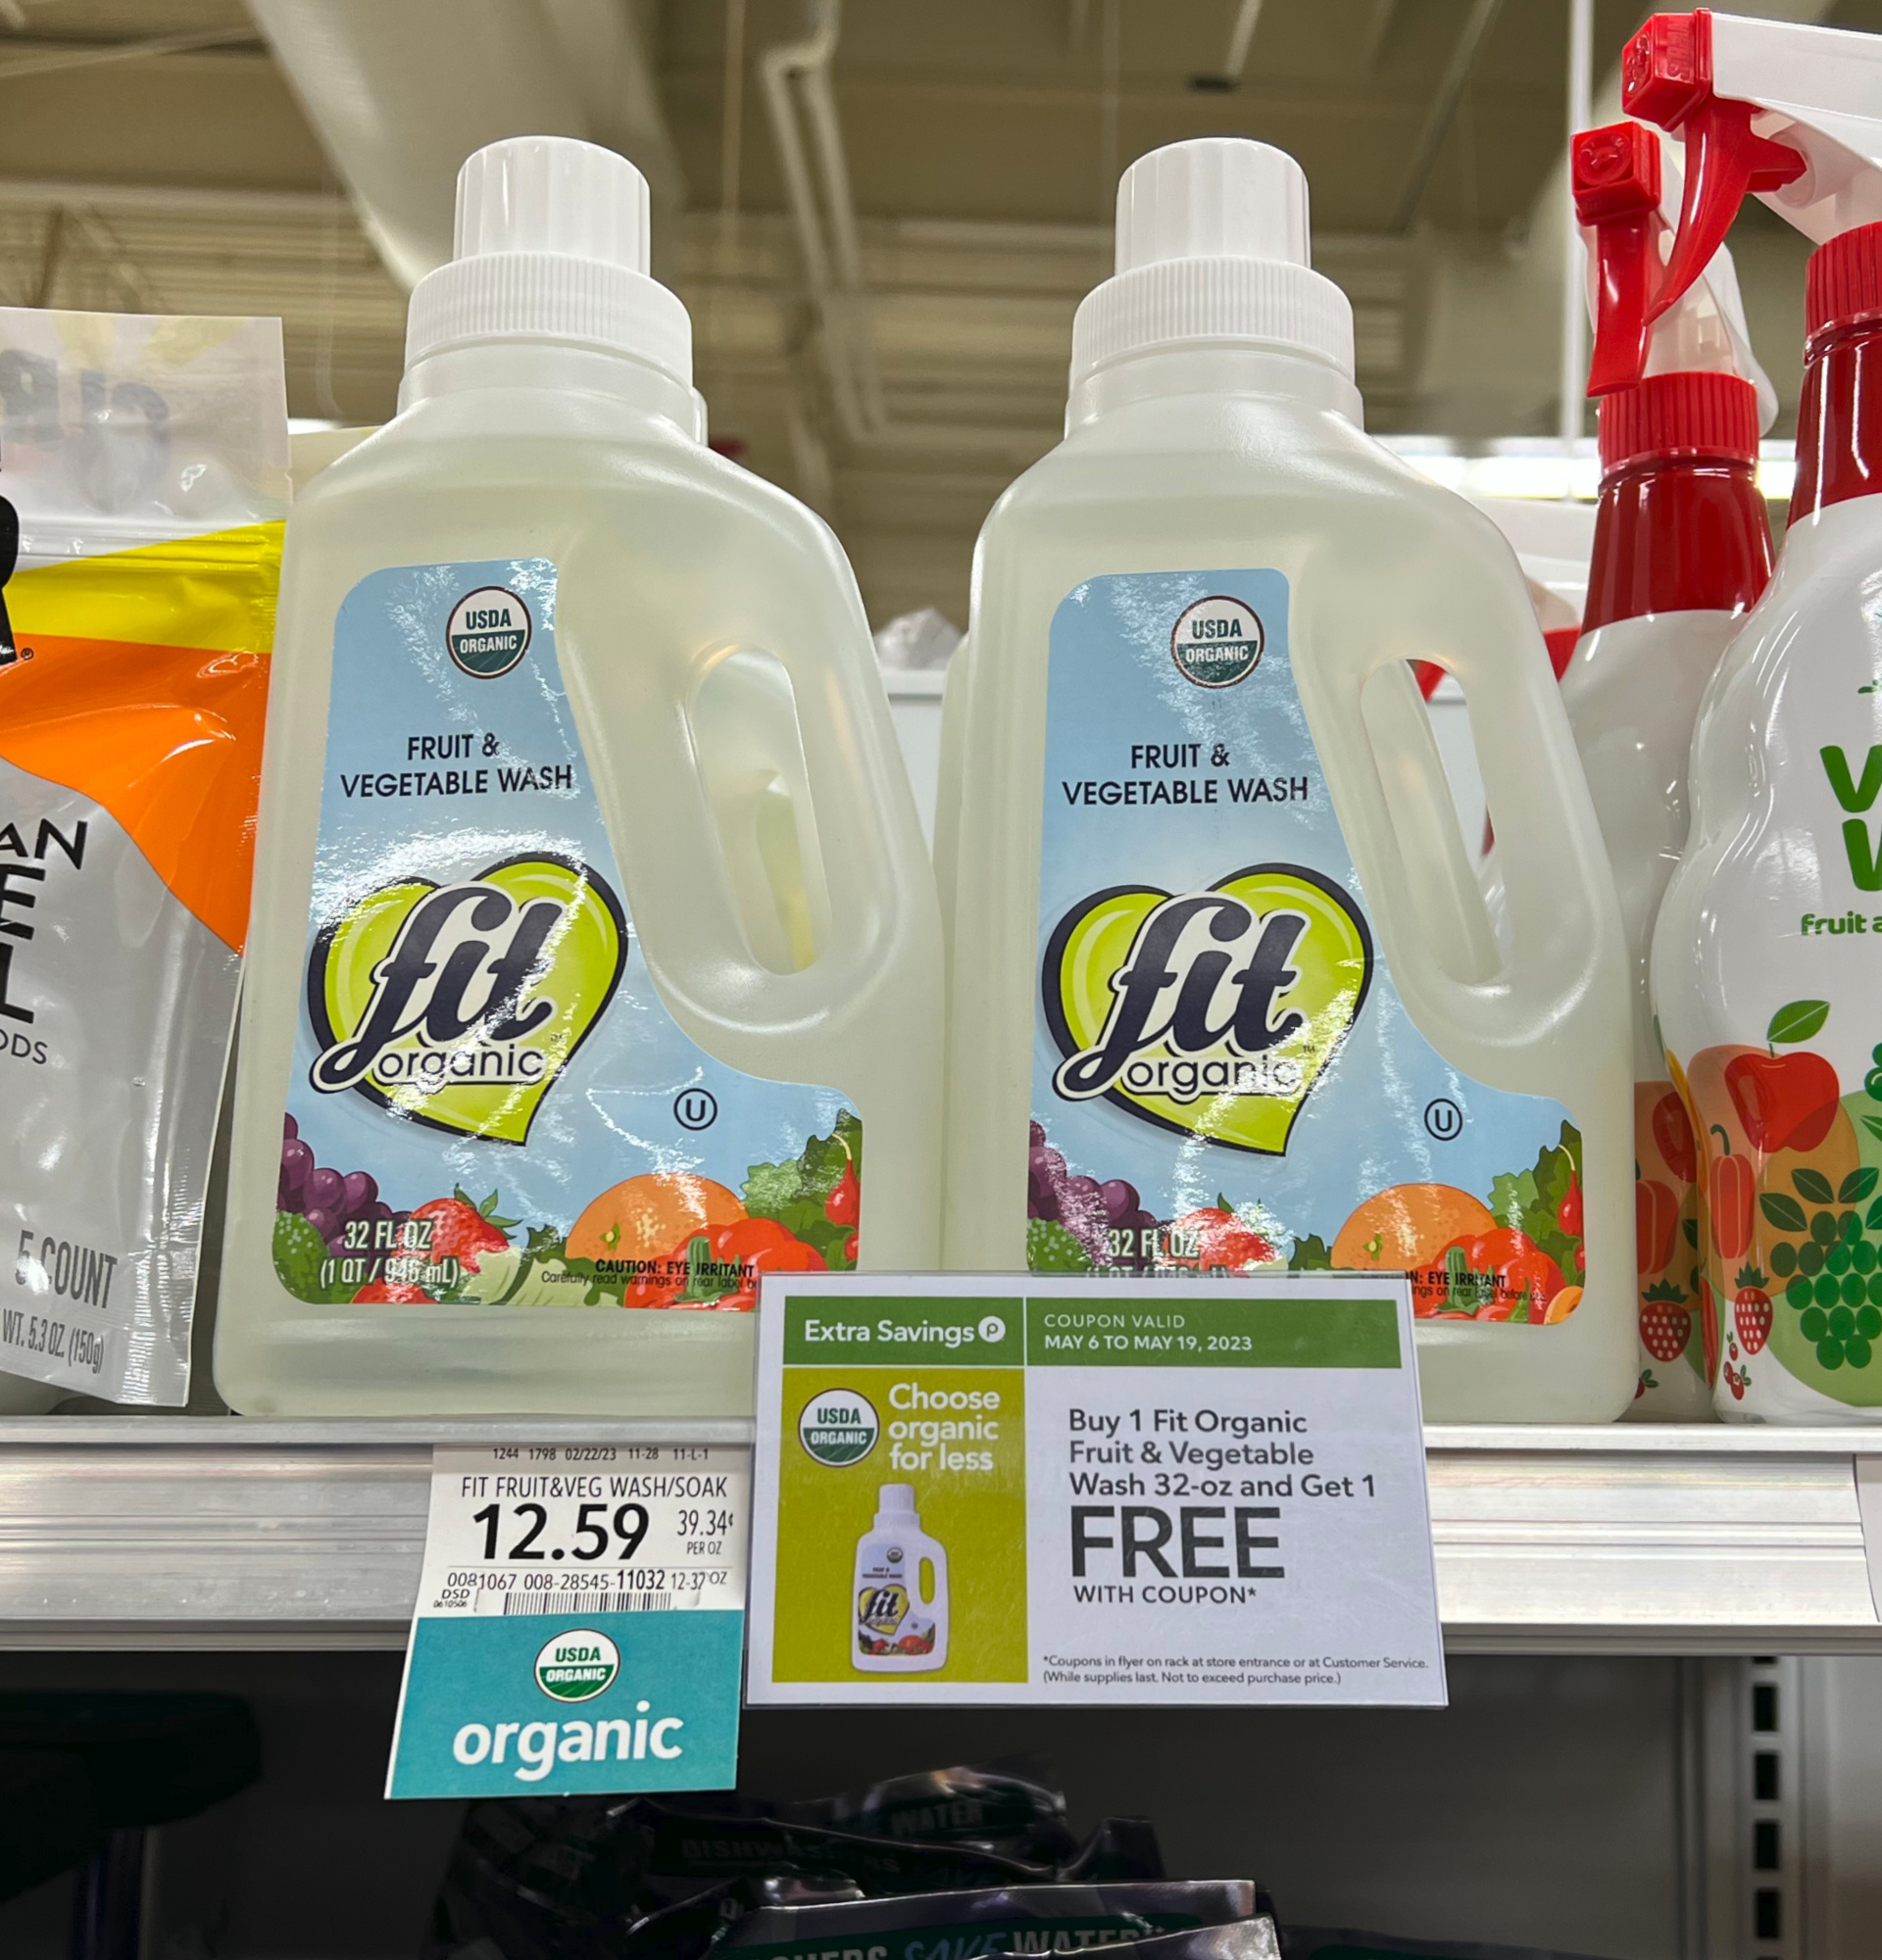 Fit Organic Fruit & Vegetable Wash Just $6.30 At Publix – Half Price! -  iHeartPublix